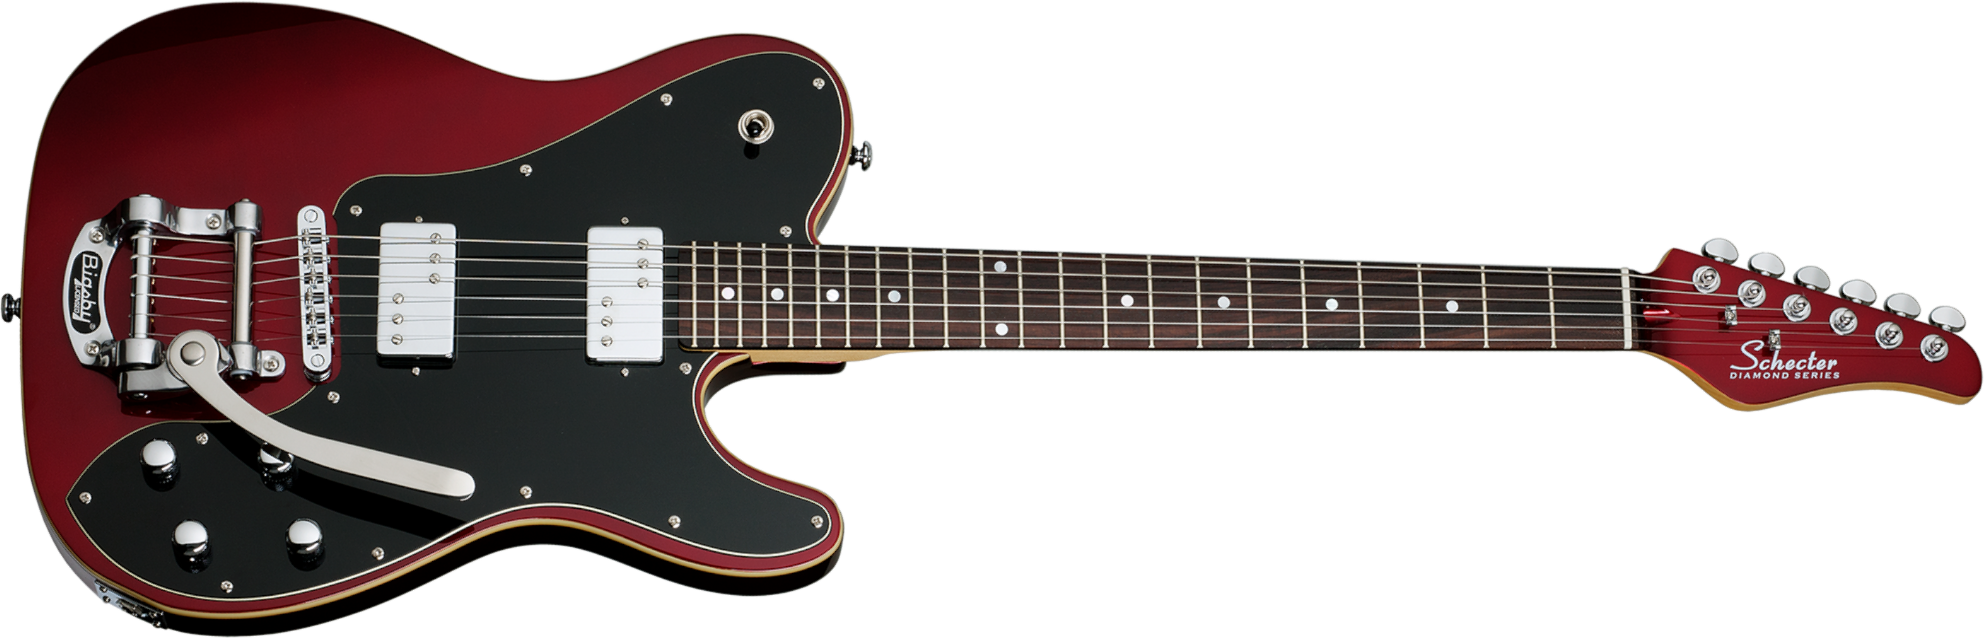 Schecter Pt Fastback Ii B Bigsby 2h Trem Bigsby Rw - Metallic Red - E-Gitarre in Teleform - Main picture